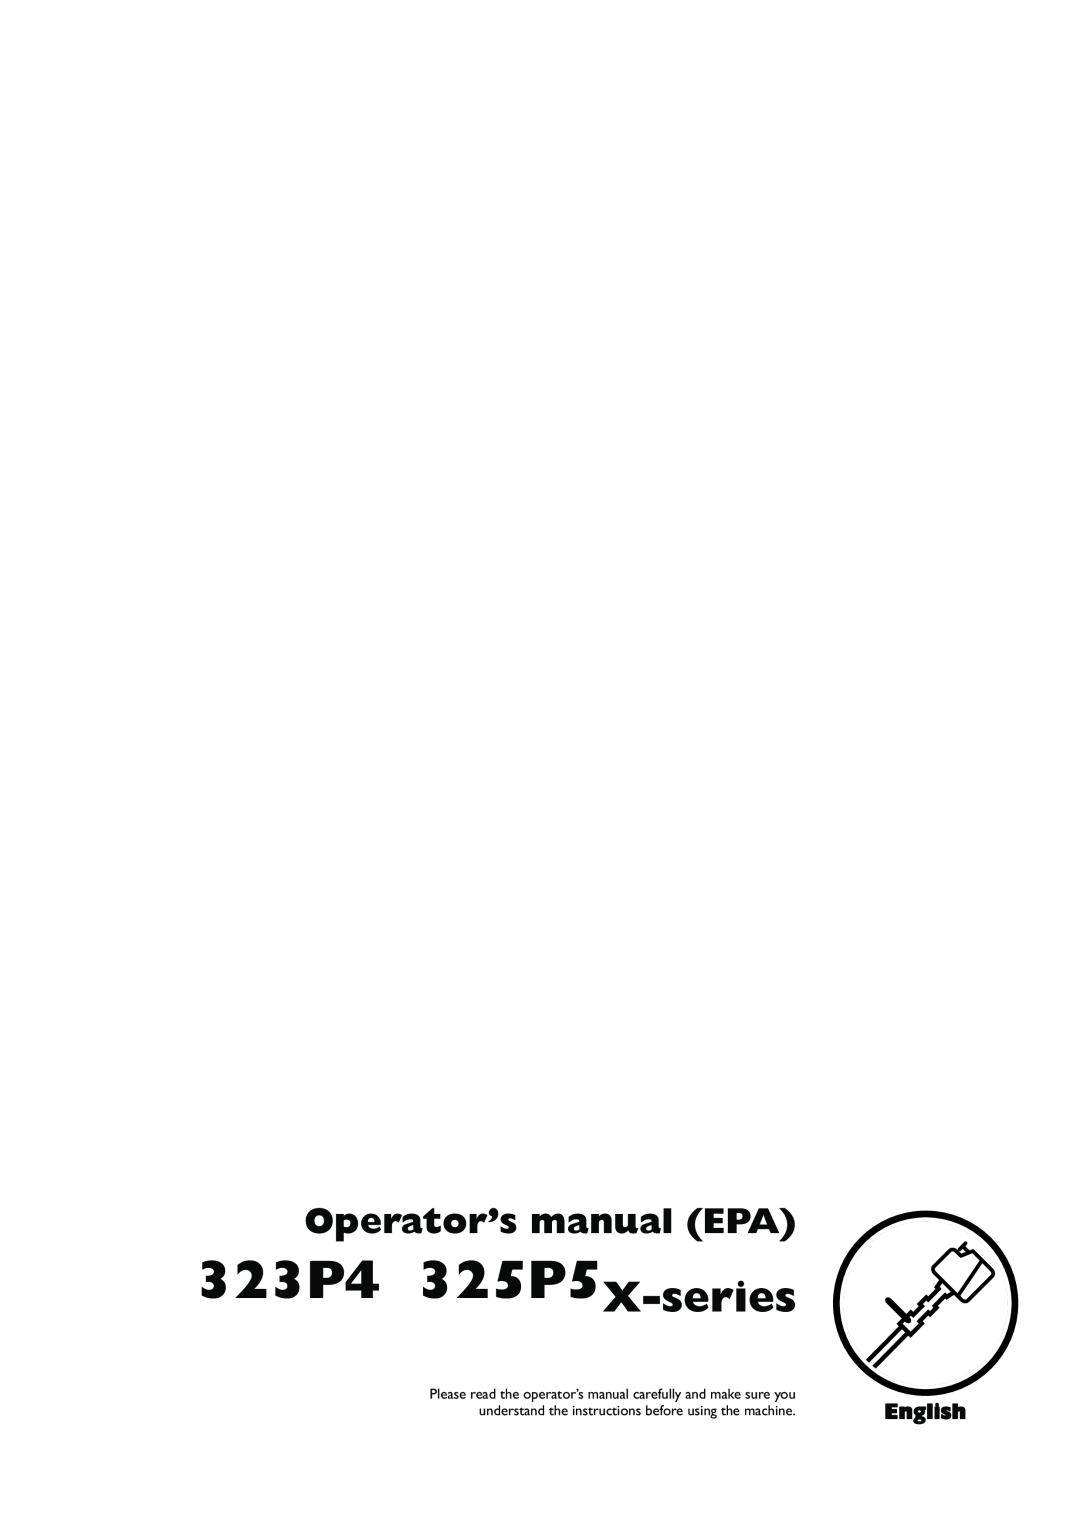 Husqvarna 323P4, 325P5 manual 323P4 325P5X-series, Operator’s manual EPA, English 